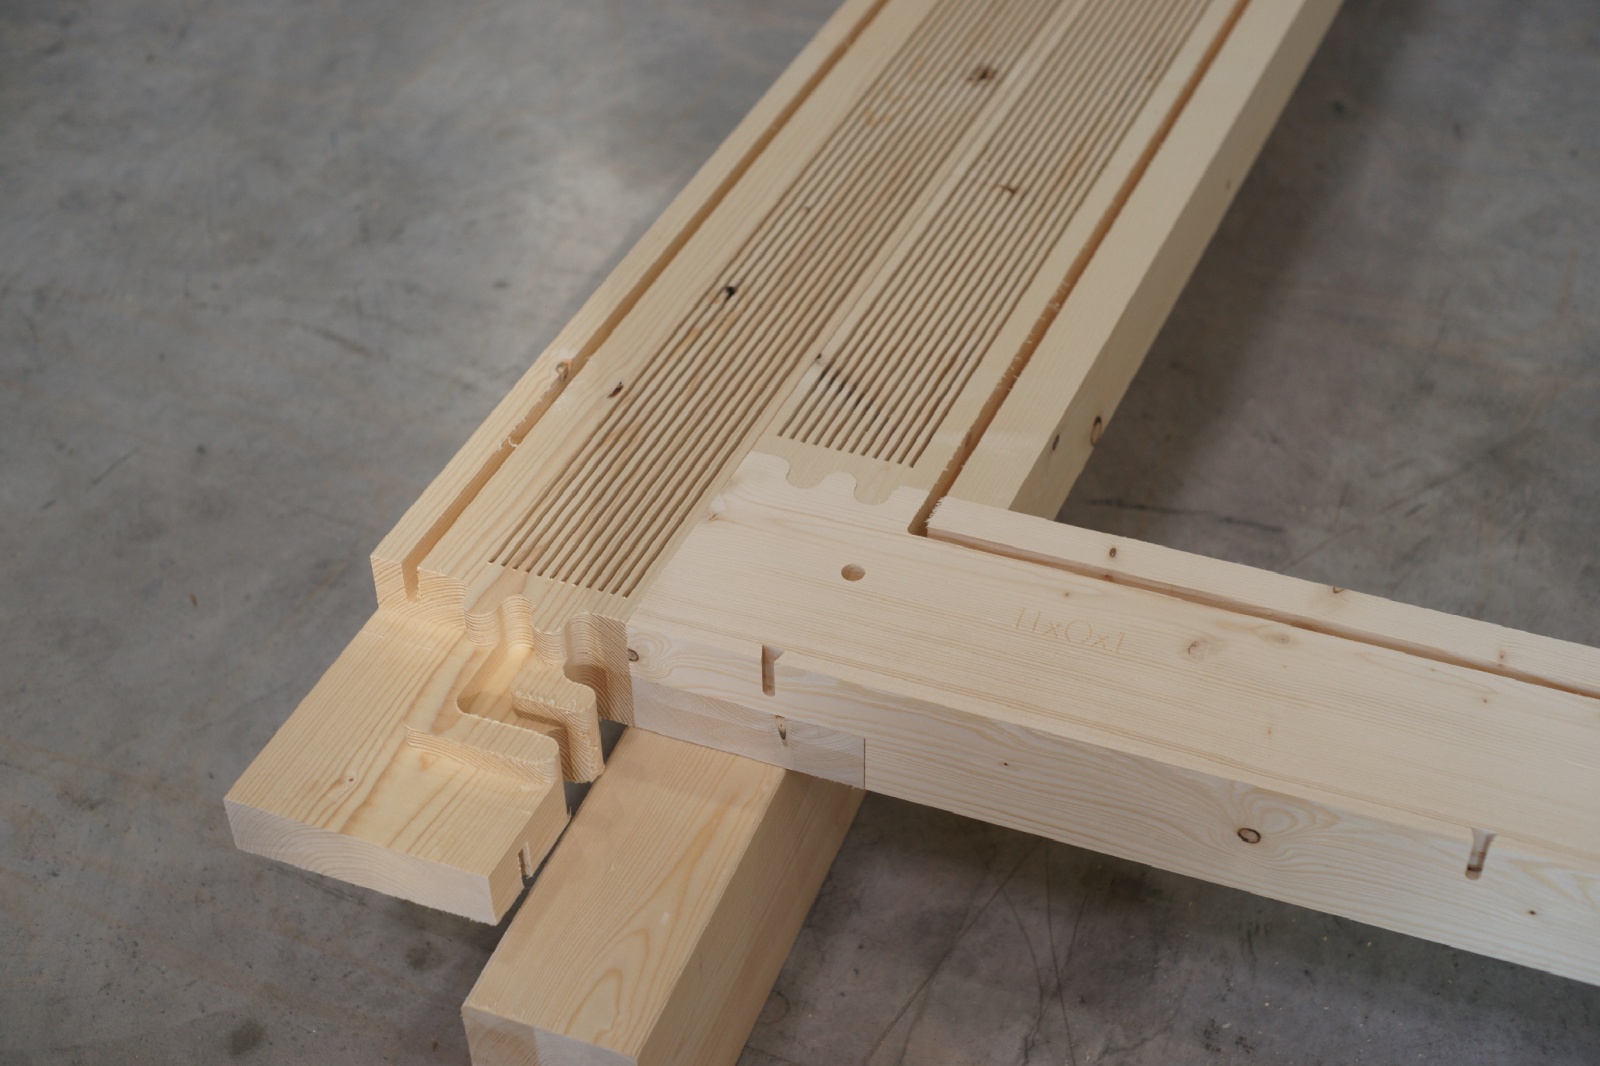 Timber Prototype House, Fräsung Fertigungprozess, Bild: Oliver Bucklin, ICD